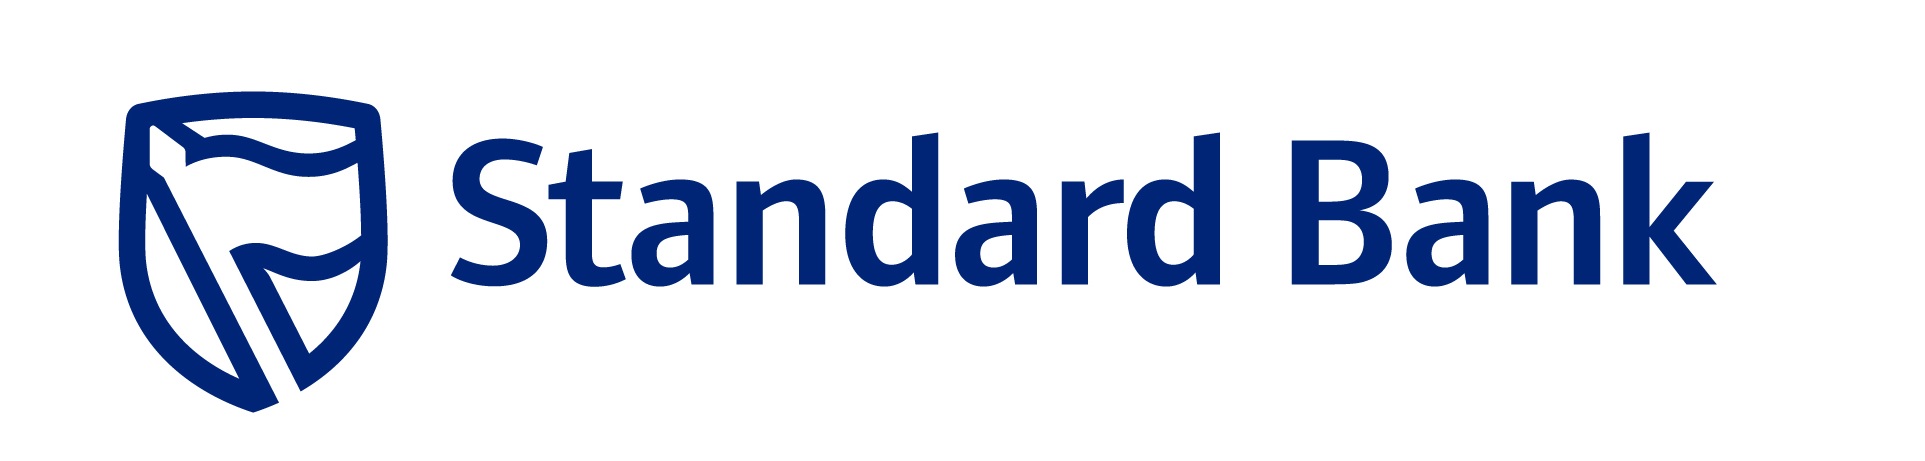 Standard Bank Brand Logo